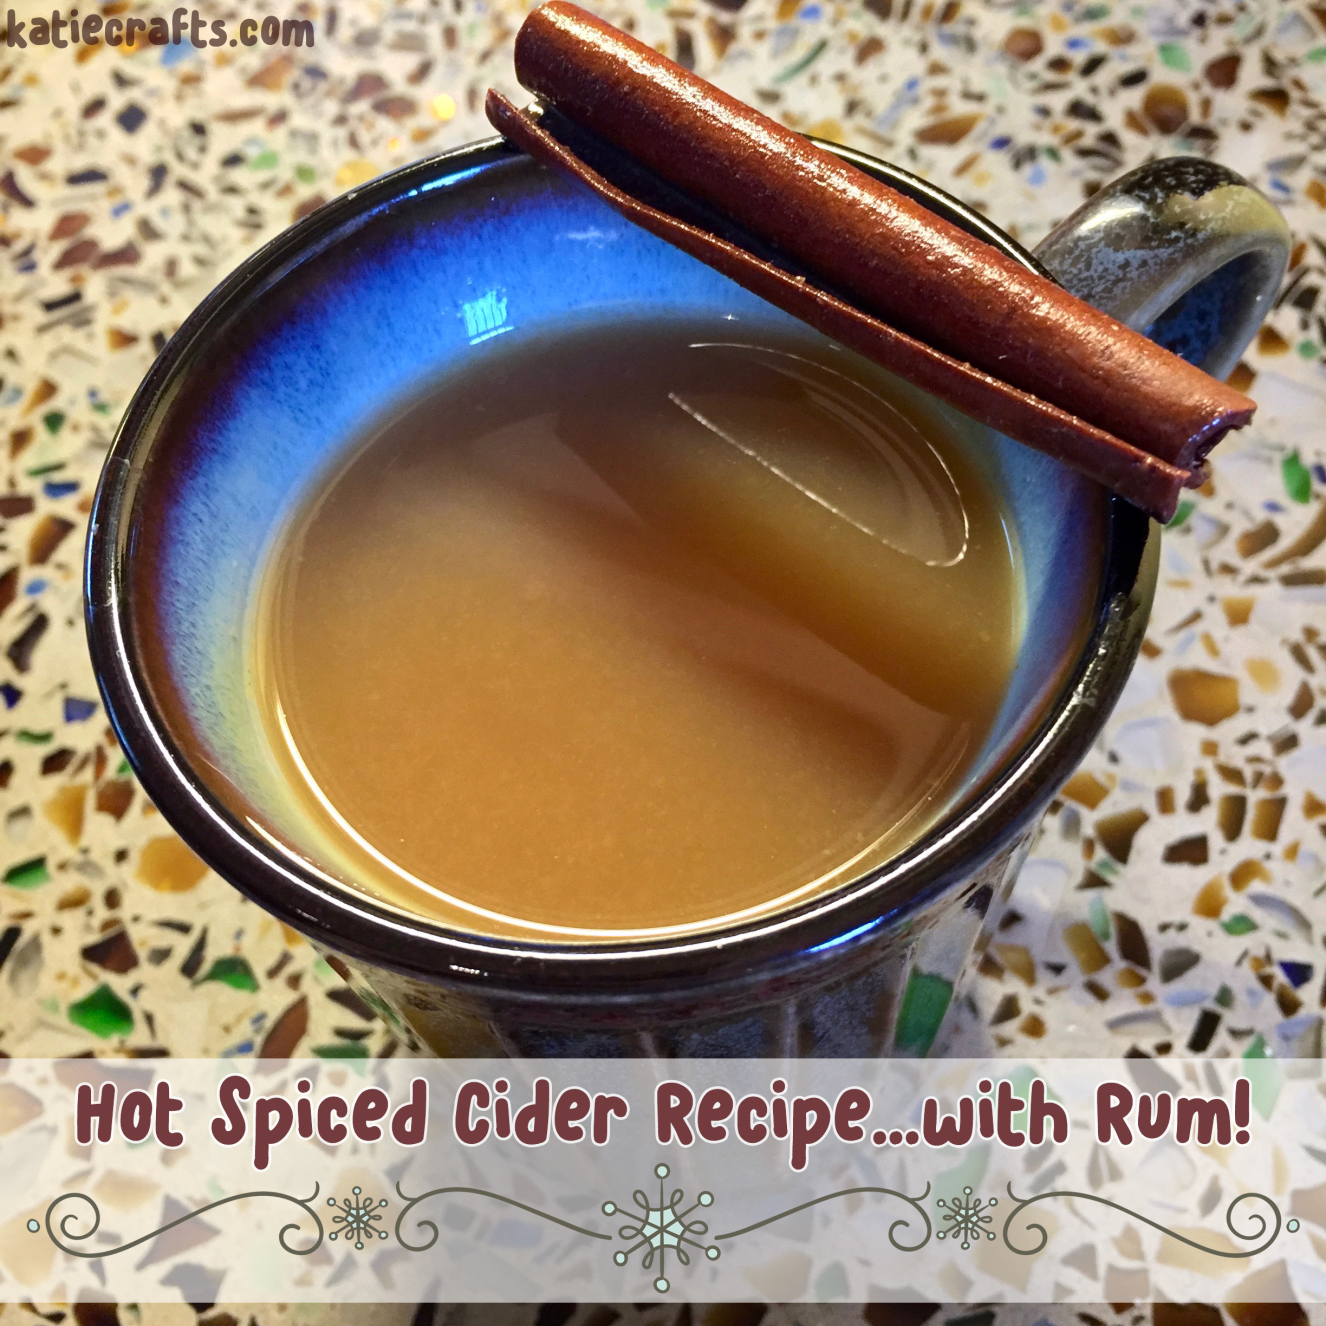 Hot Spiced Cider Recipe...With Rum! on Katie Crafts; https://www.katiecrafts.com